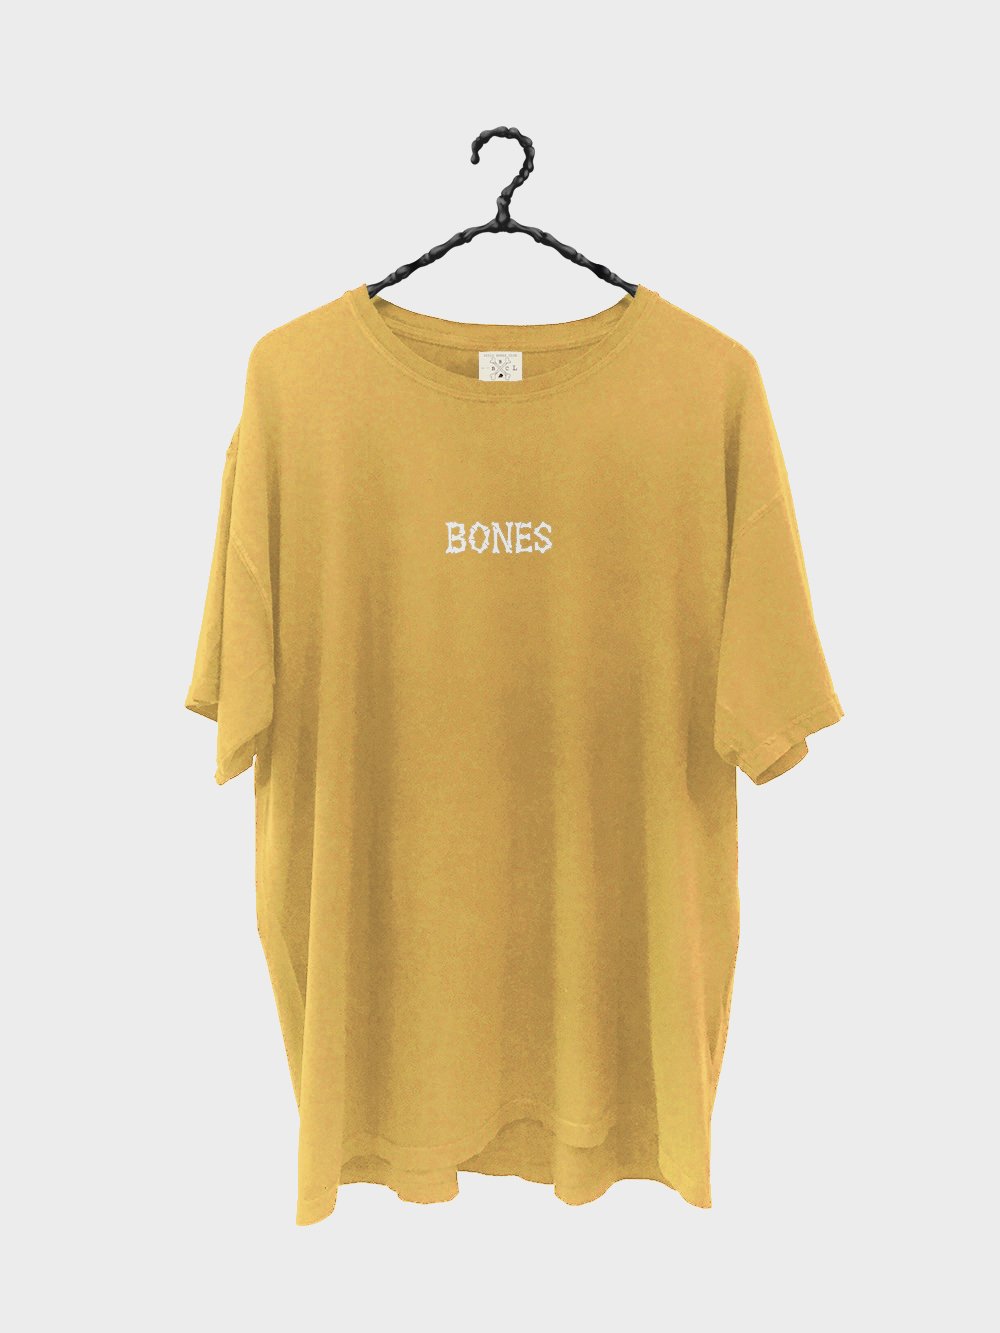 Bones Club Tee - Mustard